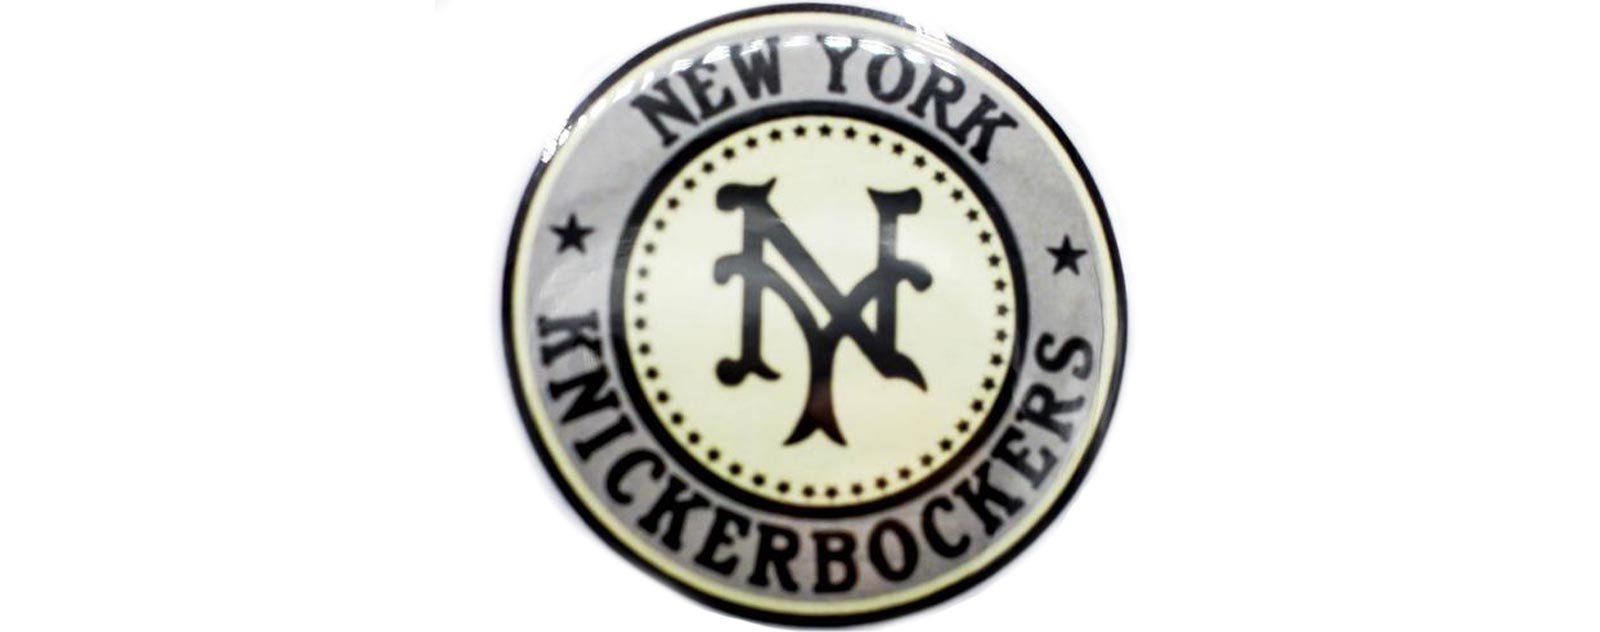 knickerbockers new york baseball